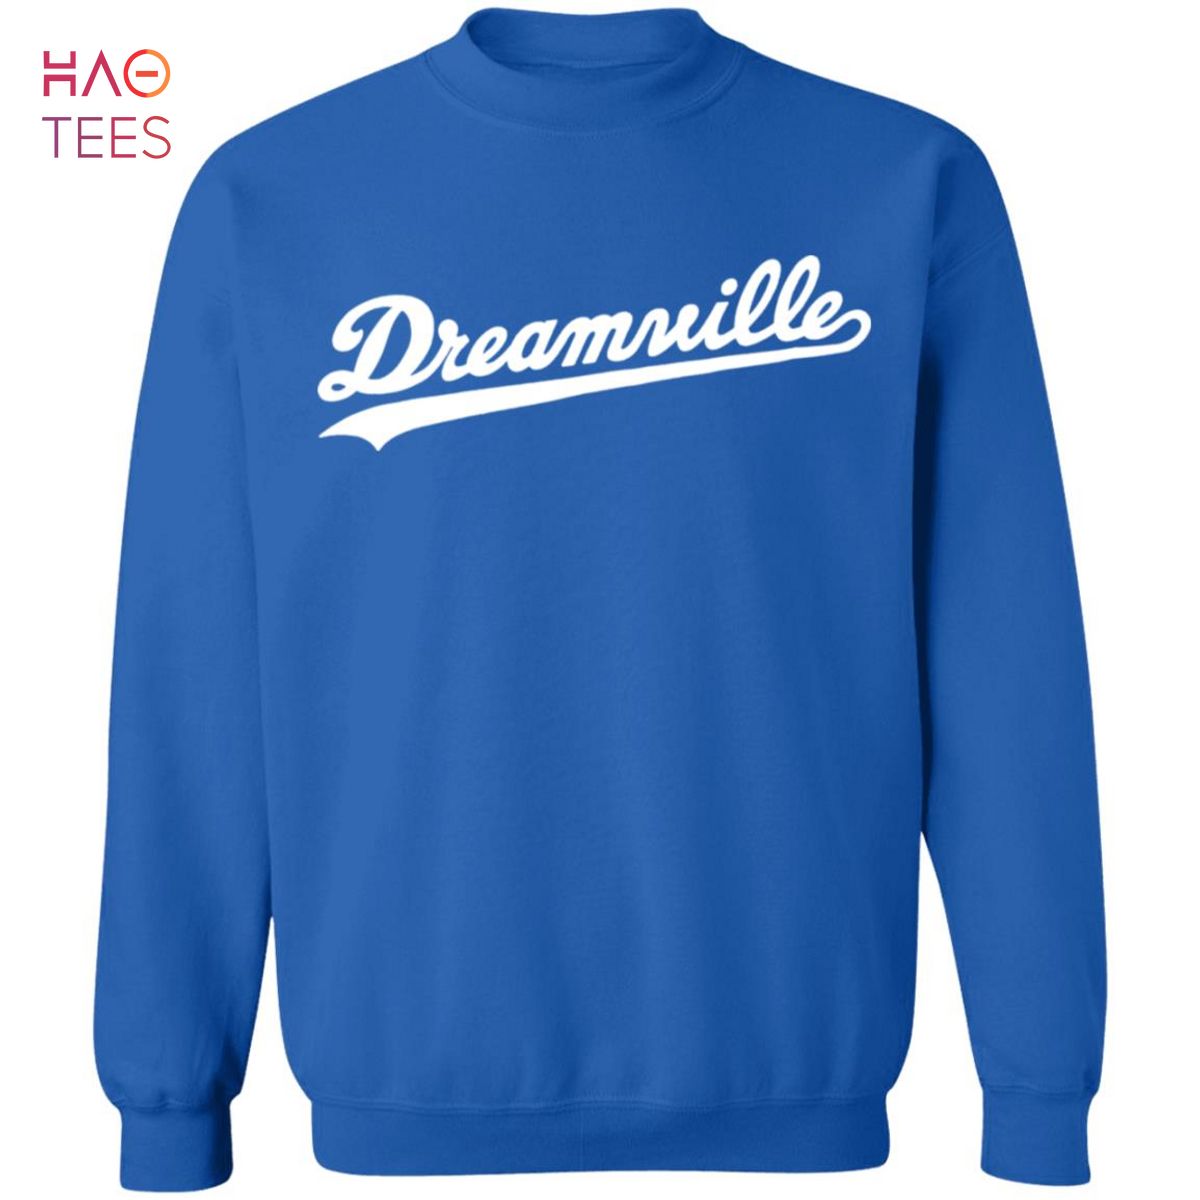 NEW] J Dreamville